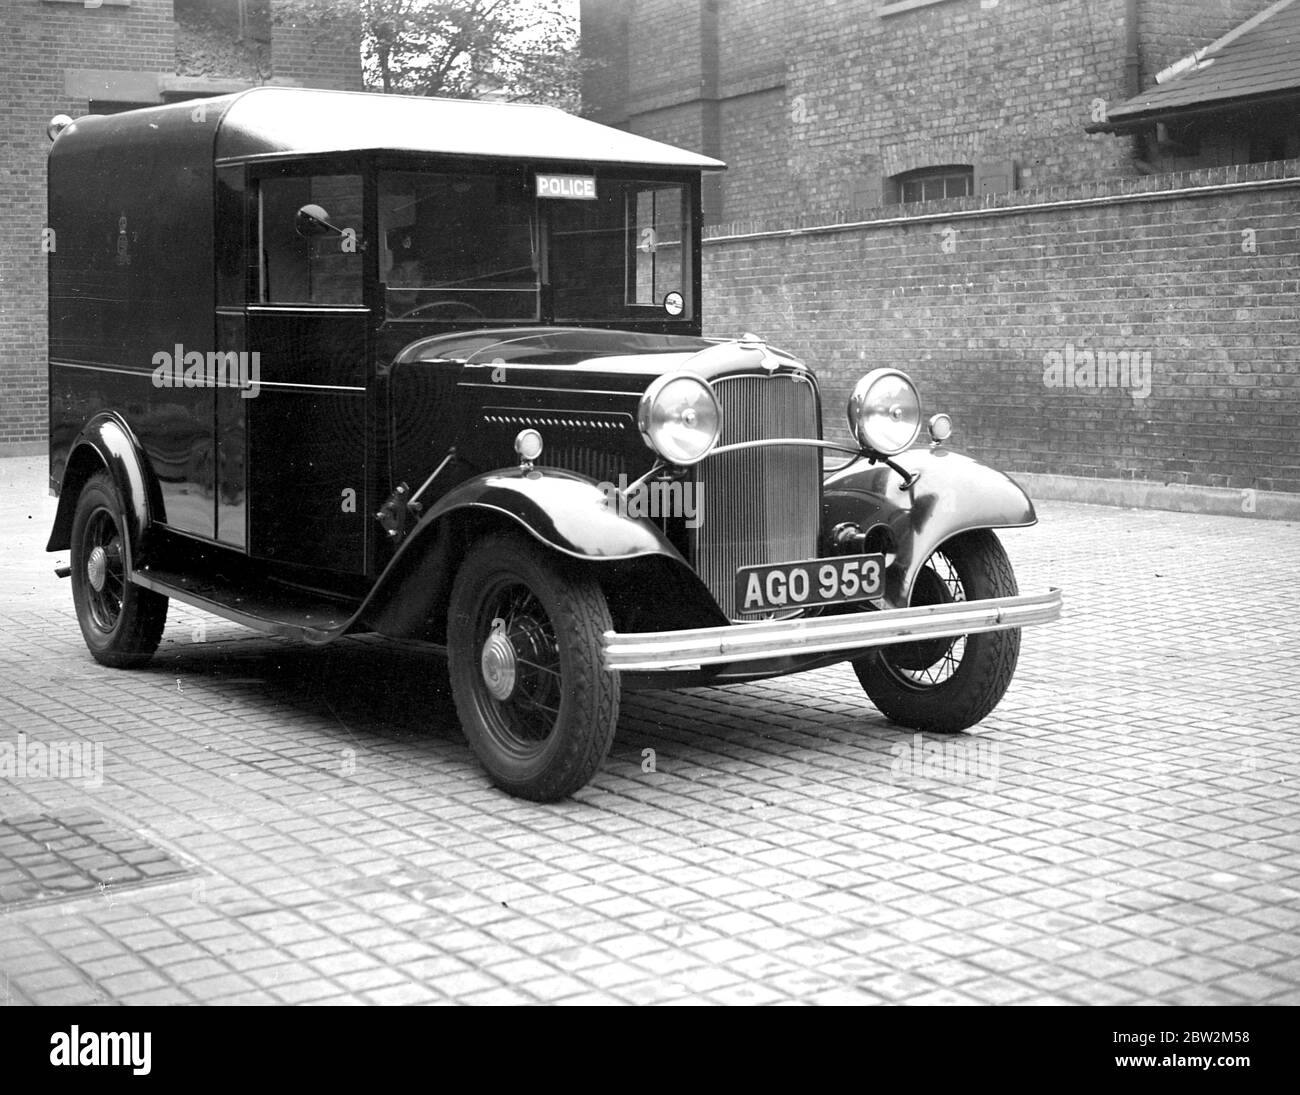 A police utility van. 1933 Stock Photo